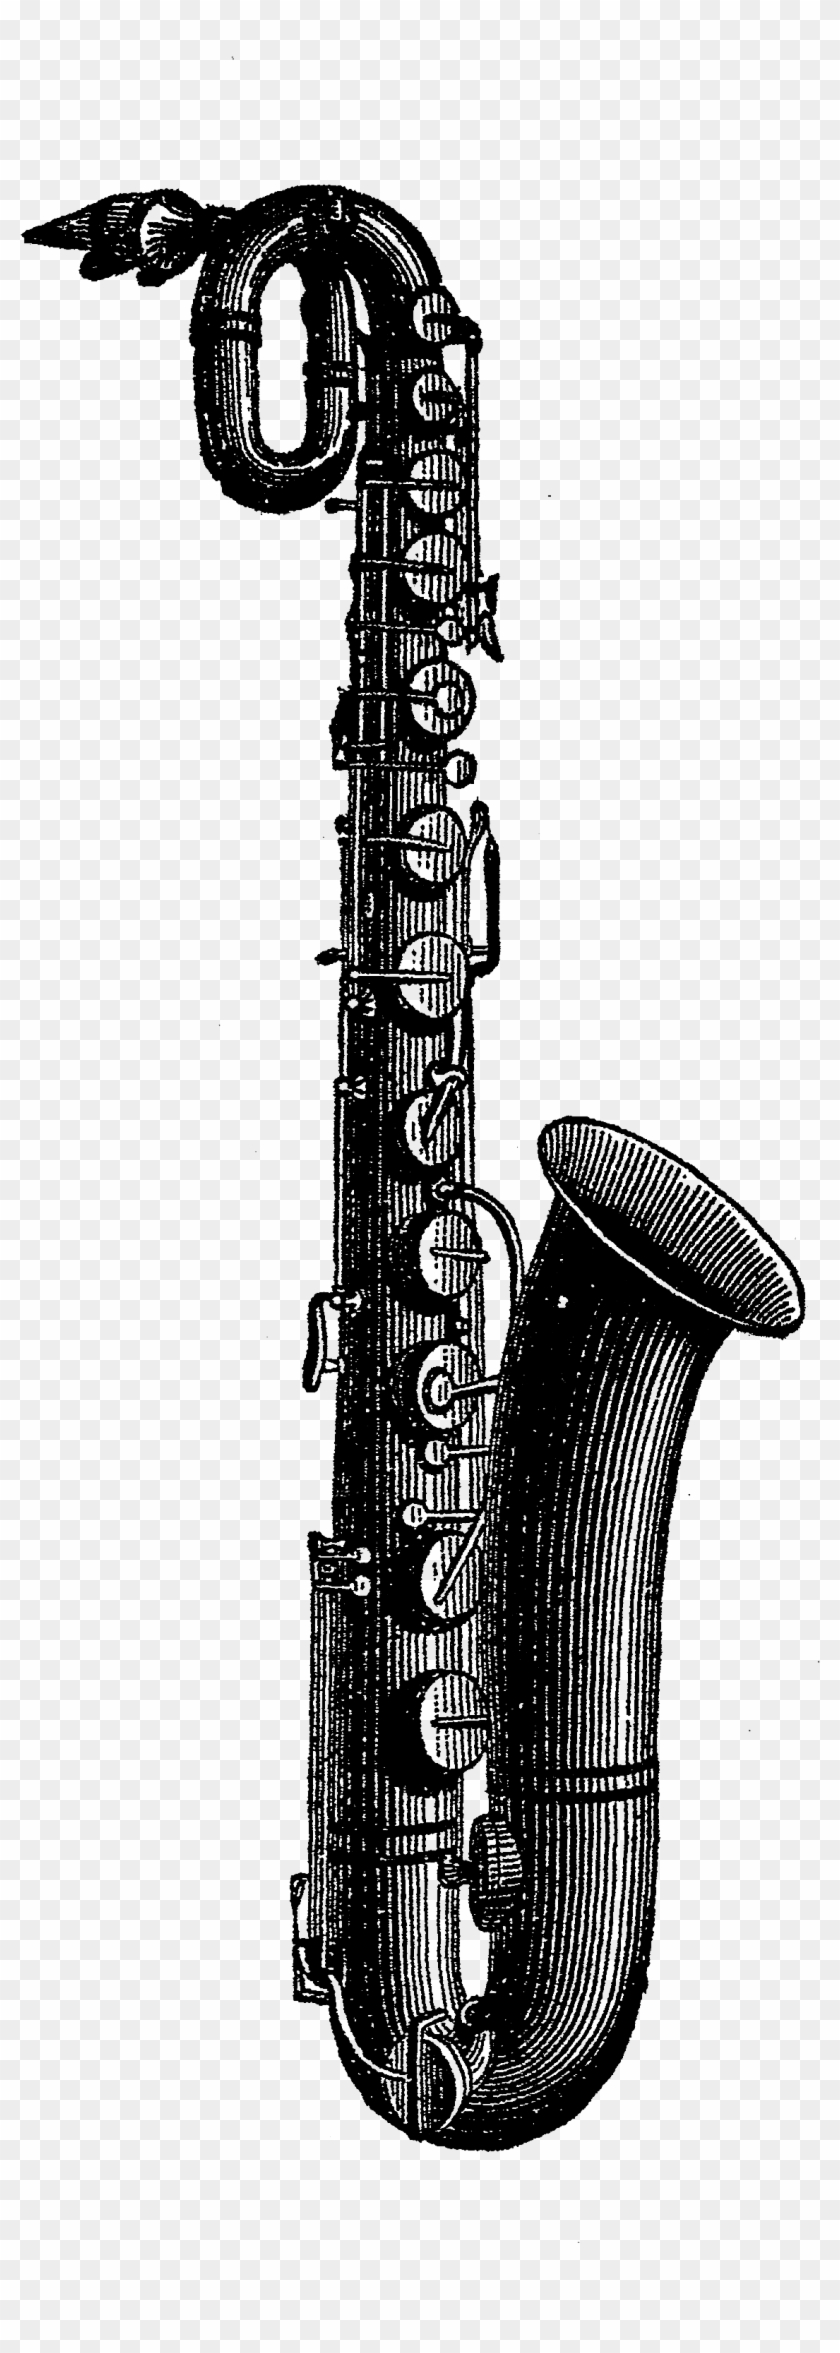 2027 Saxophone Victorian Era Free Vintage Clip Art - Jazz Sax Music Business Branding Design Bag, Adult #1112876